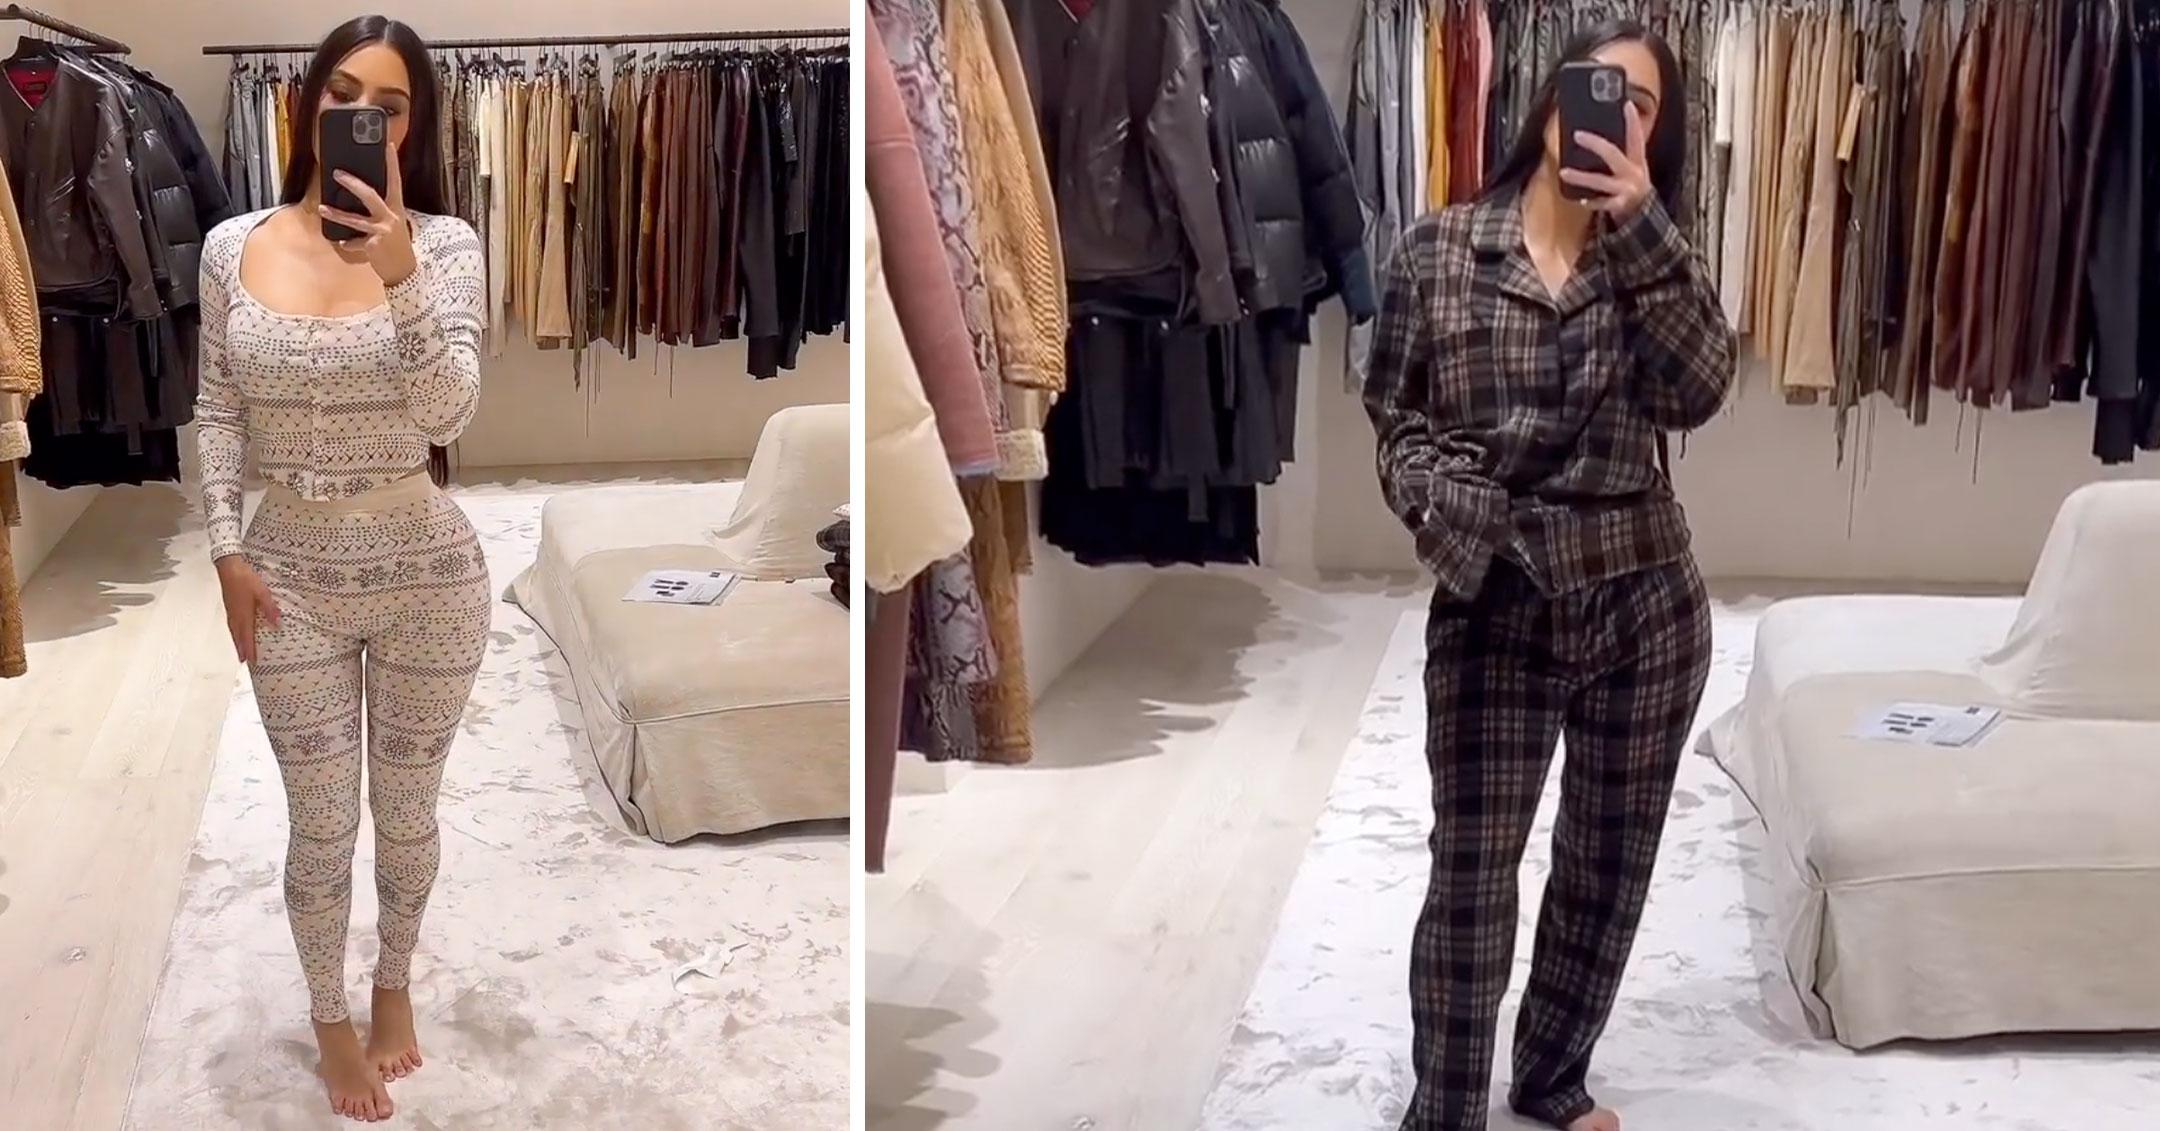 Kim Kardashian's SKIMS Pajamas Are Available In New Styles: Photos